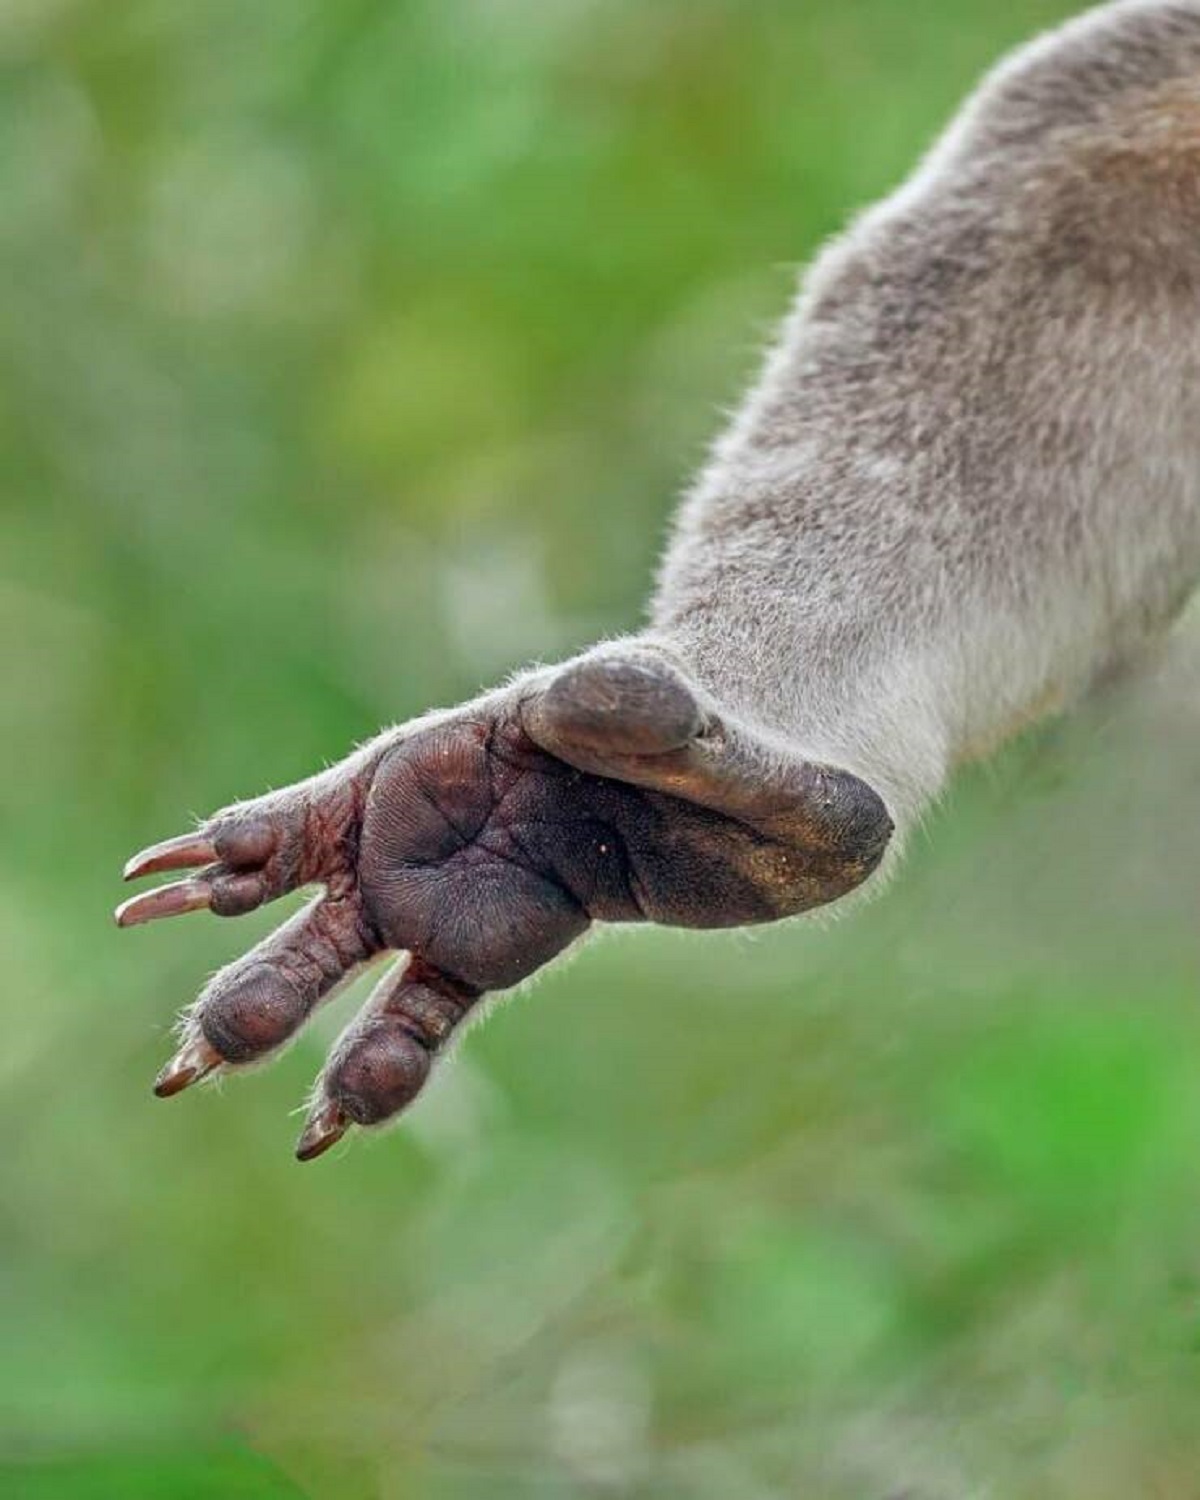 Koalas have fingerprints that are extremely similar to human fingerprints: